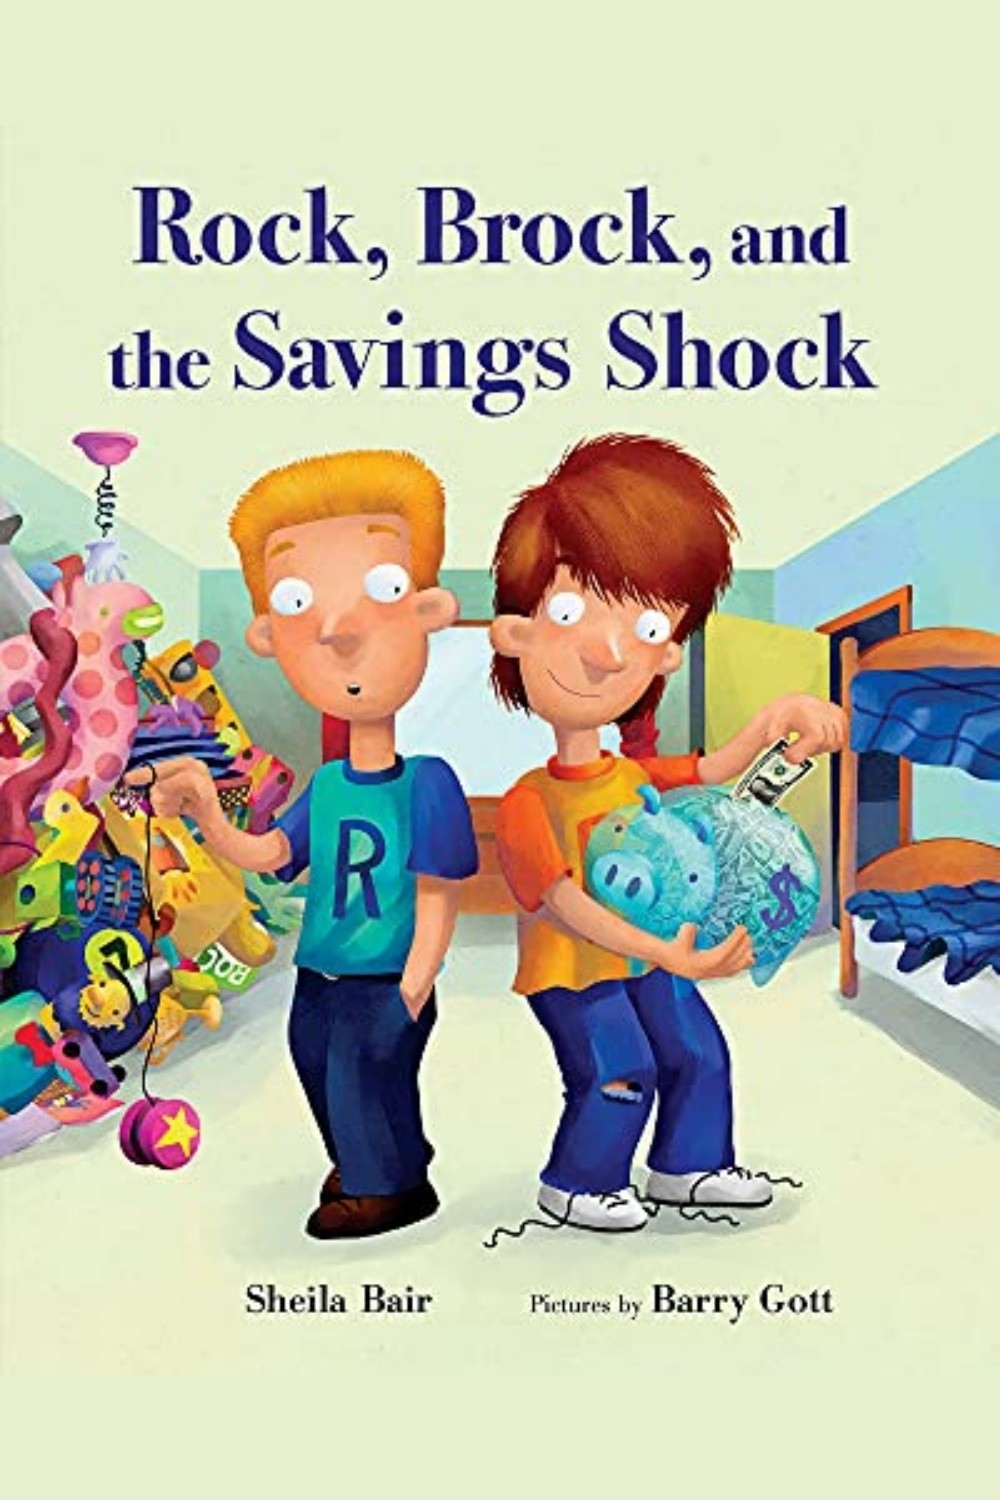 Rock, Brock, and the Savings Shock